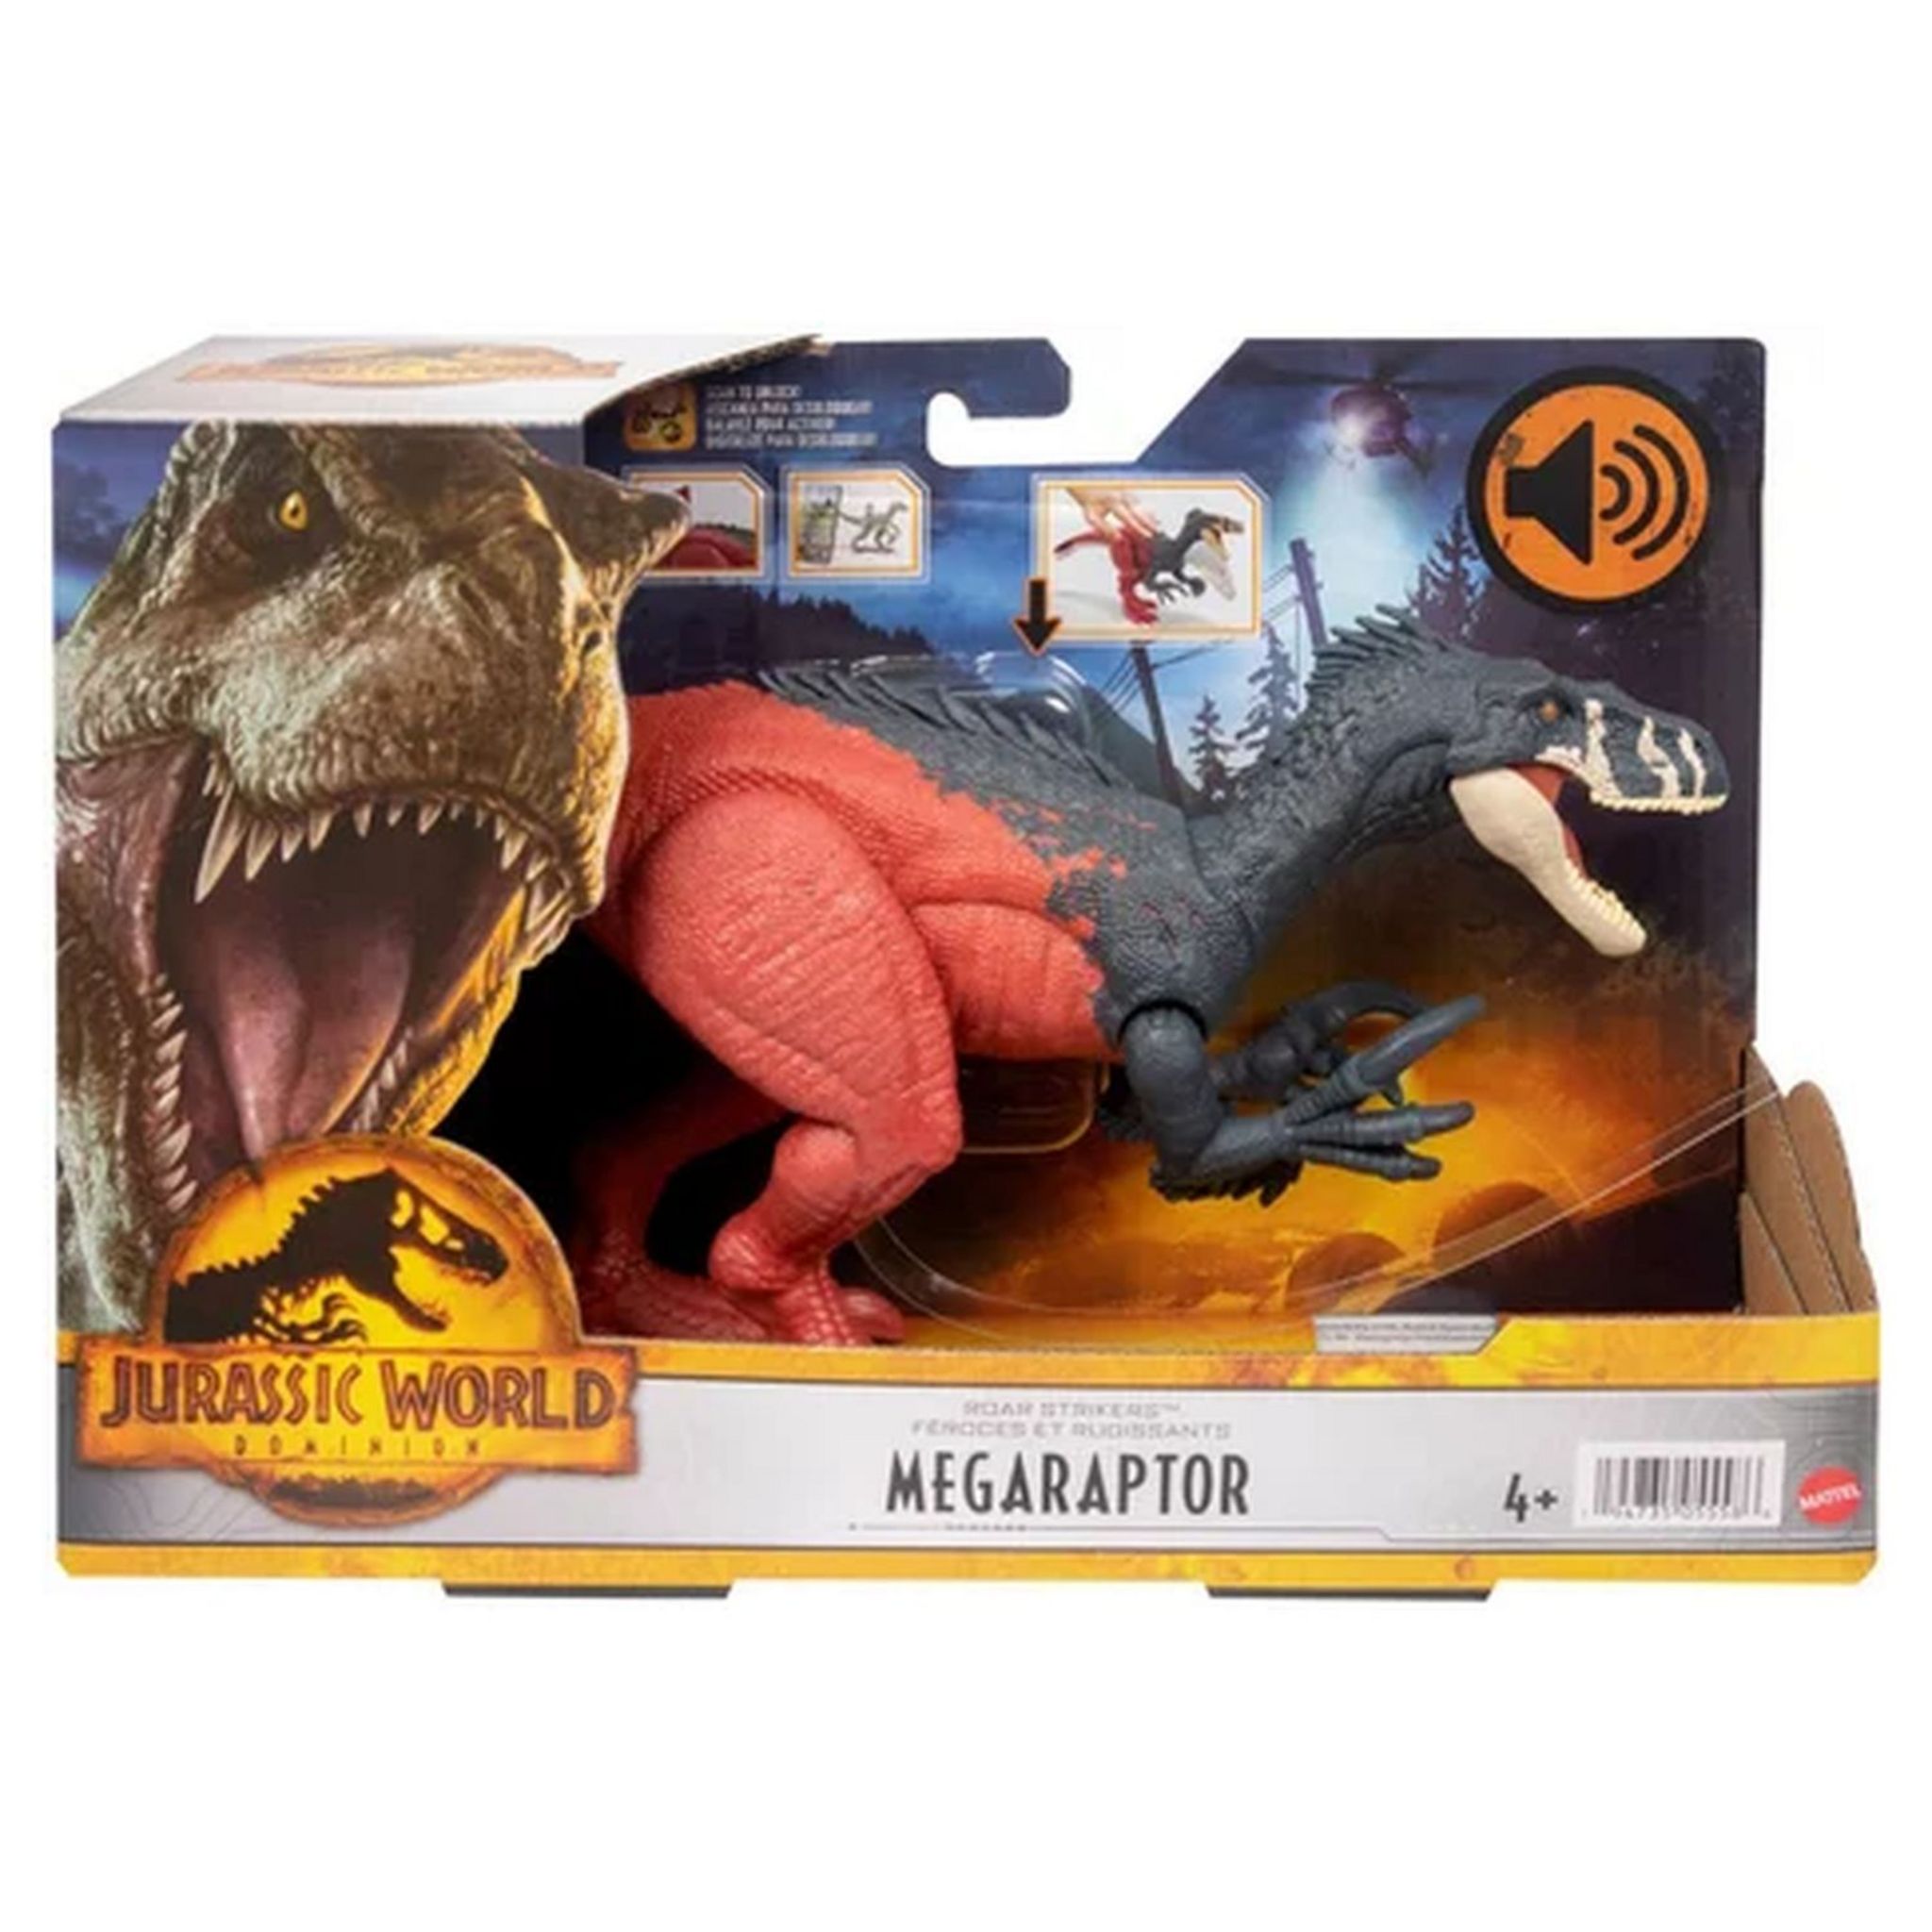 Jurassic World Figurine articulée de Megaraptor, rugissement